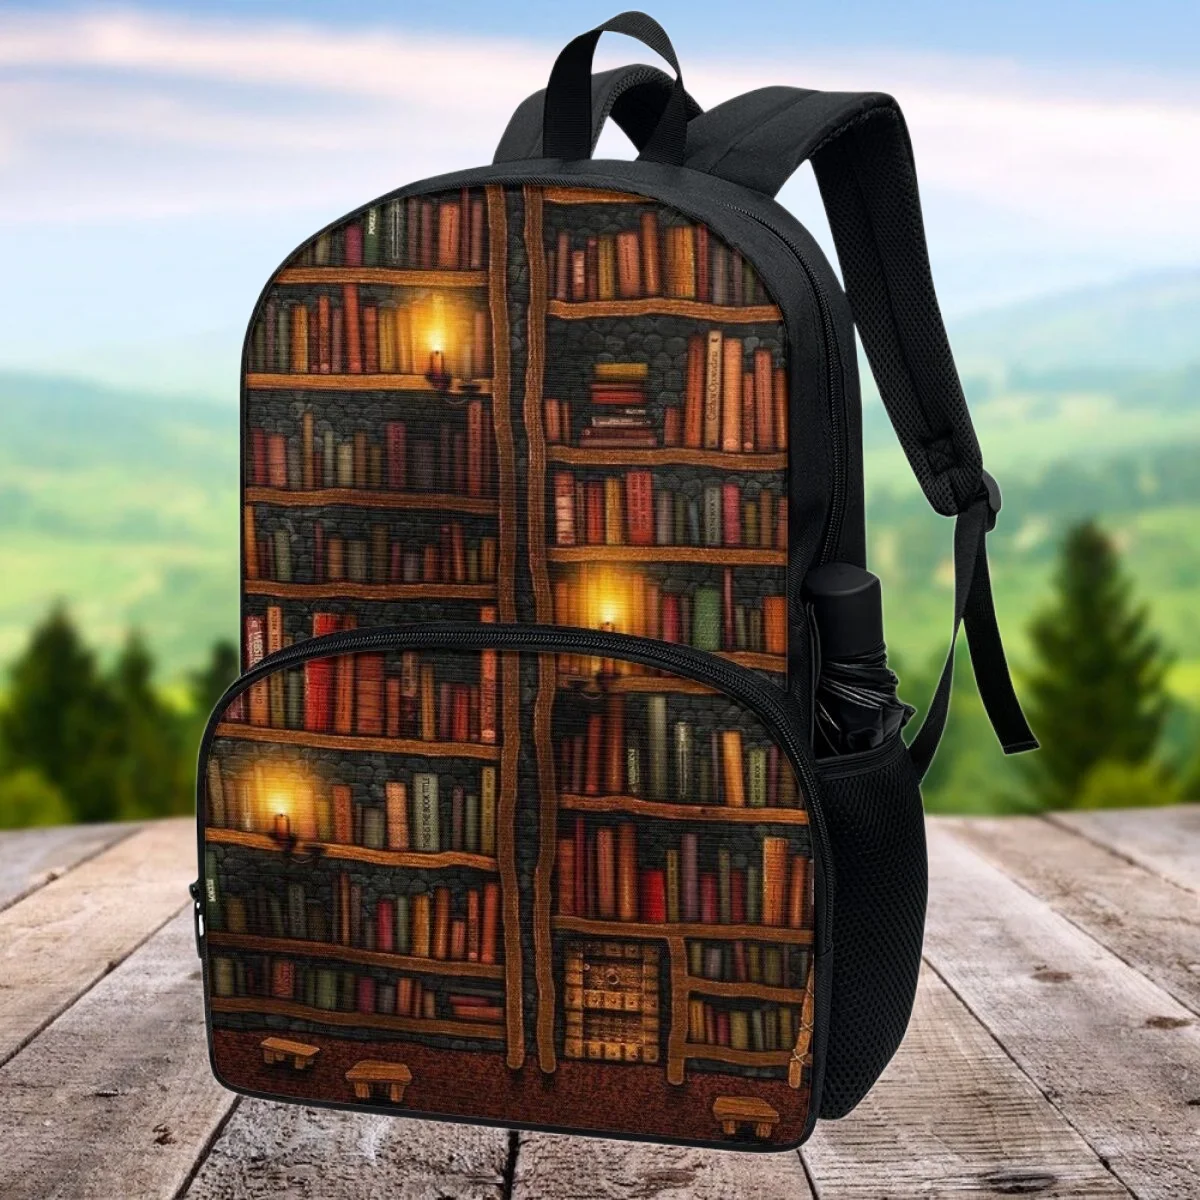 

FORUDESIGNS 3D Vintage Bookshelf Print Schoolbag for Children Book Bags 17inch Travel Bag Teen School Backpacks Leisure Knapsack